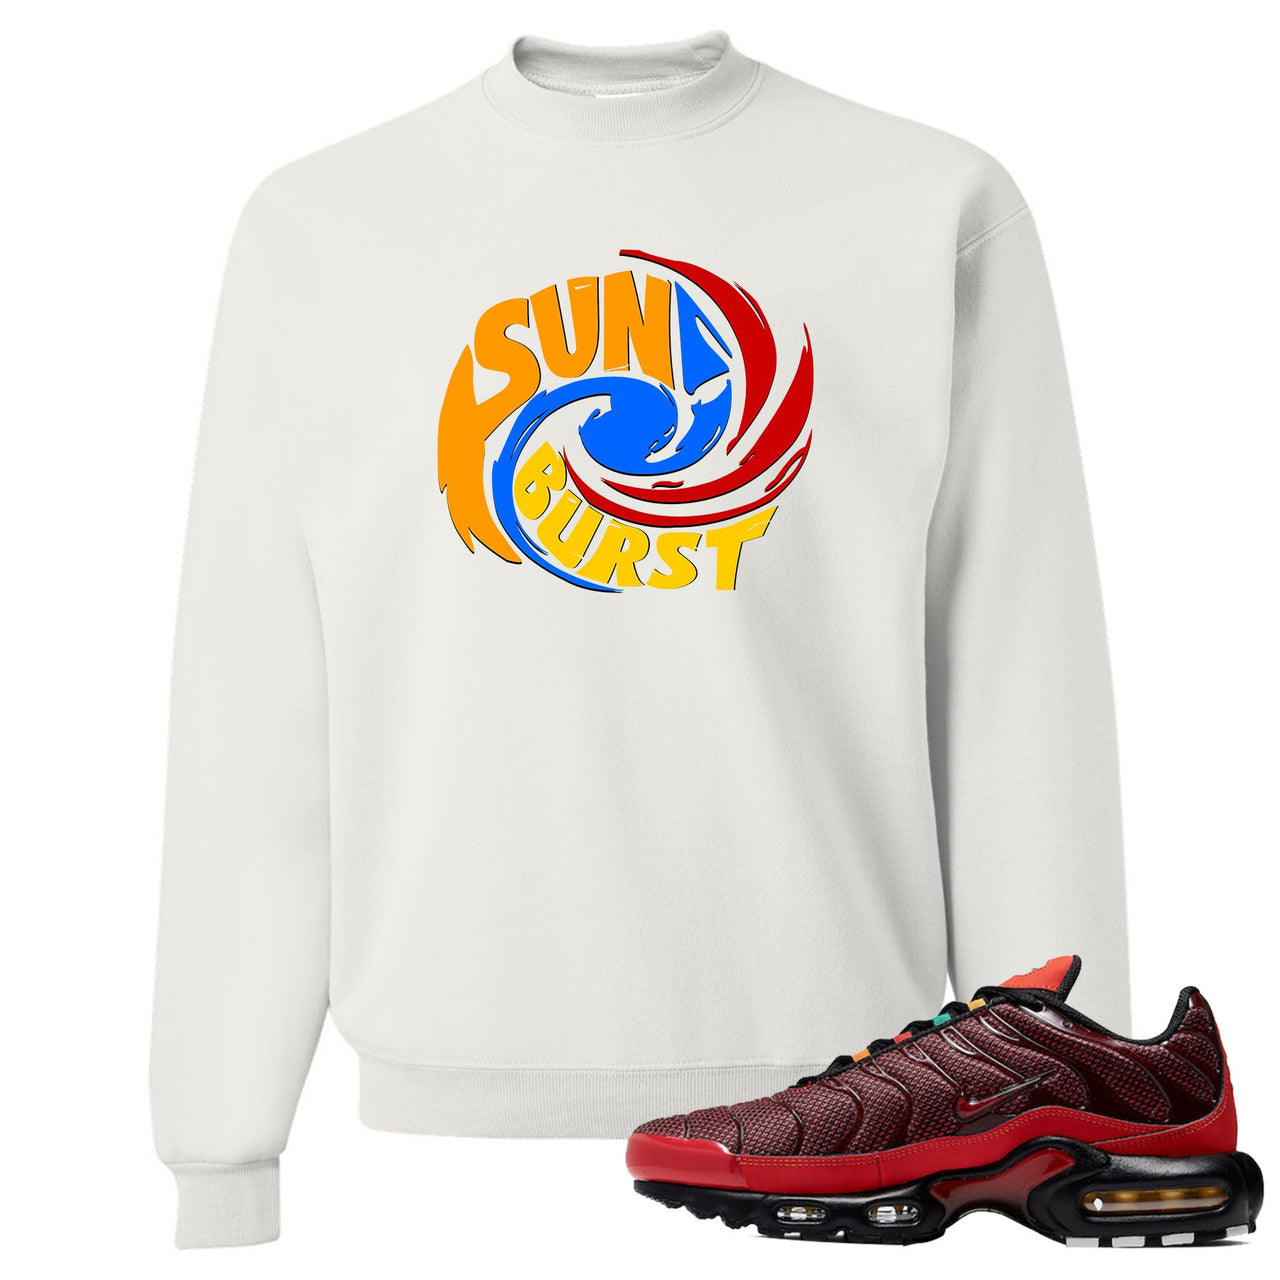 printed on the front of the air max plus sunburst sneaker matching white crewneck sweatshirt is the sunburst hurricane logo